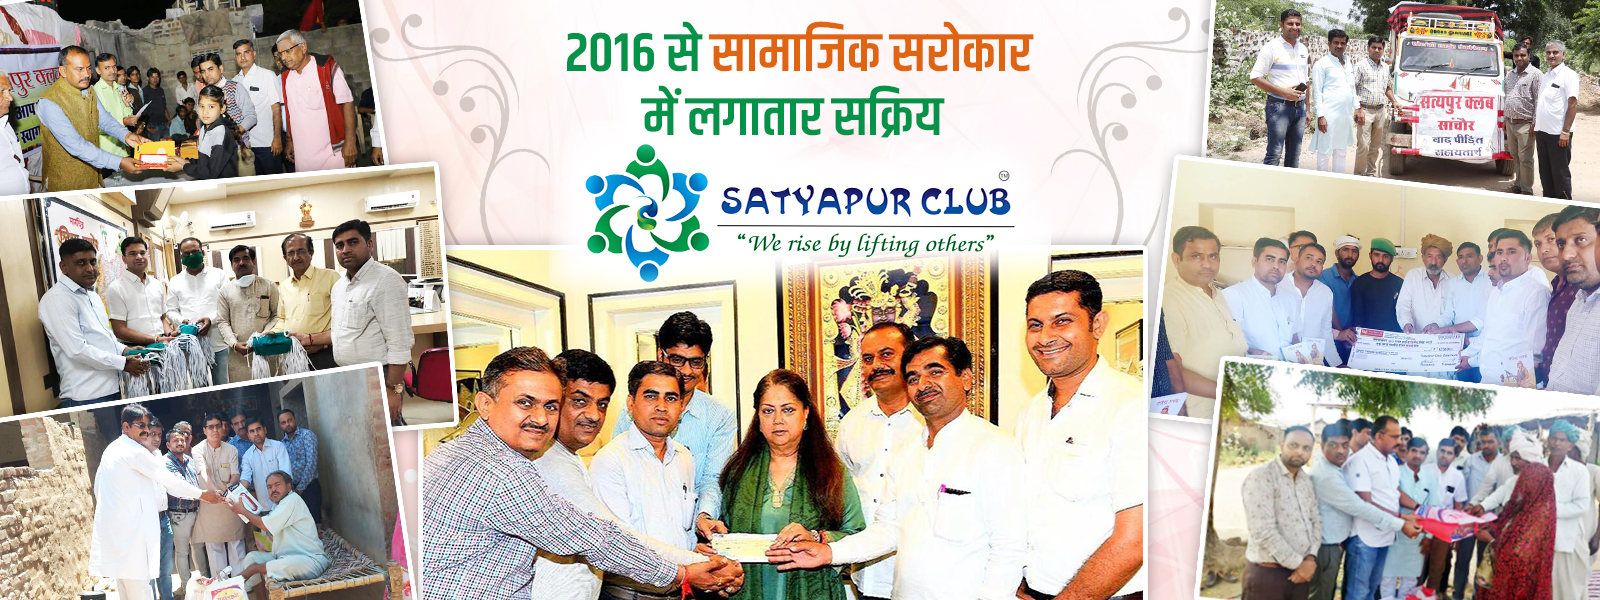 Satyapur Club